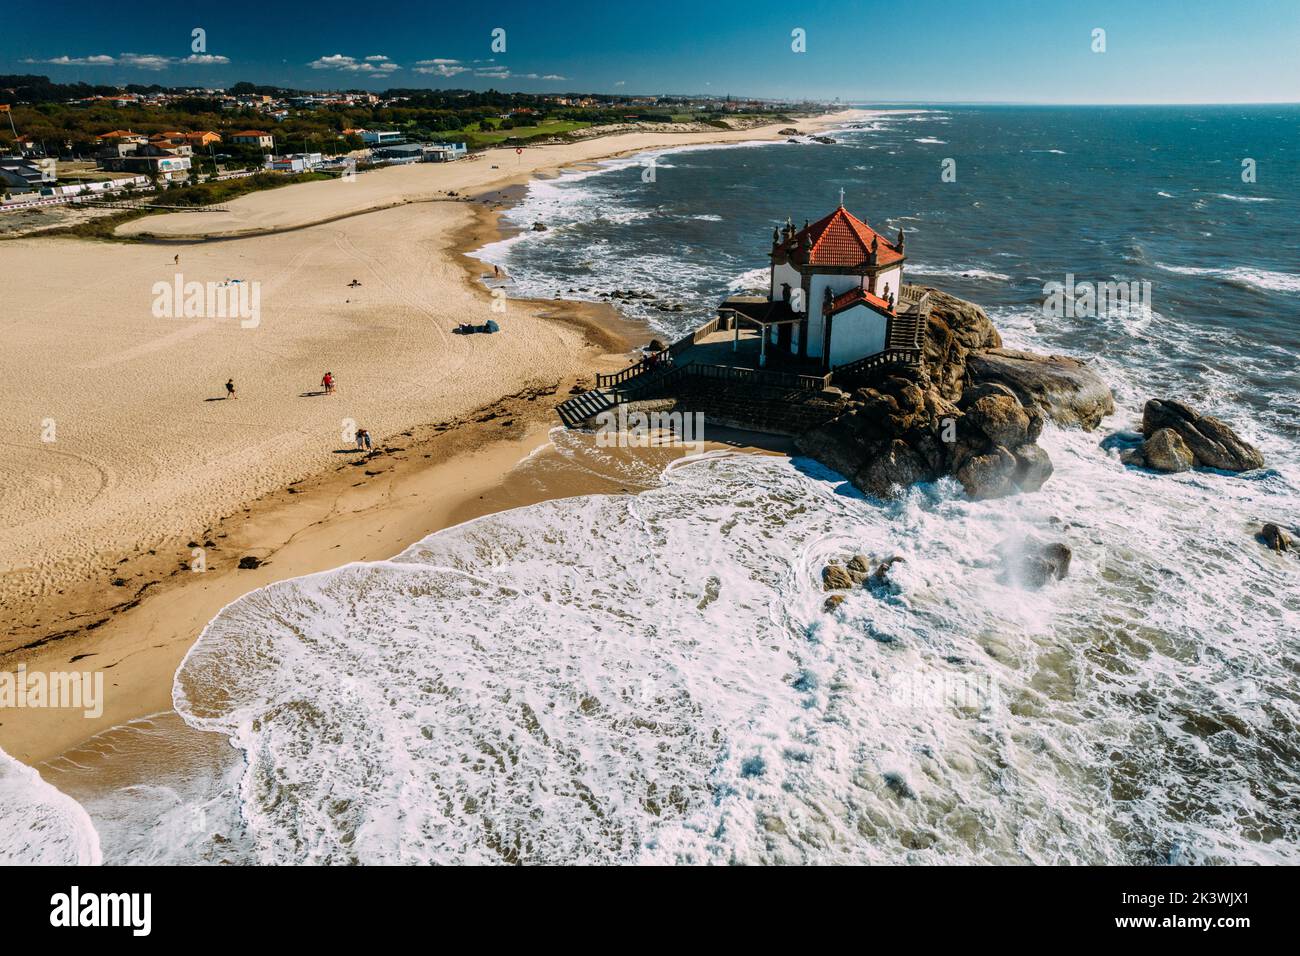 Aerial views of Senhor da Pedra Church, in the middle of the beach and ocean at Miramar, Portugal Stock Photo